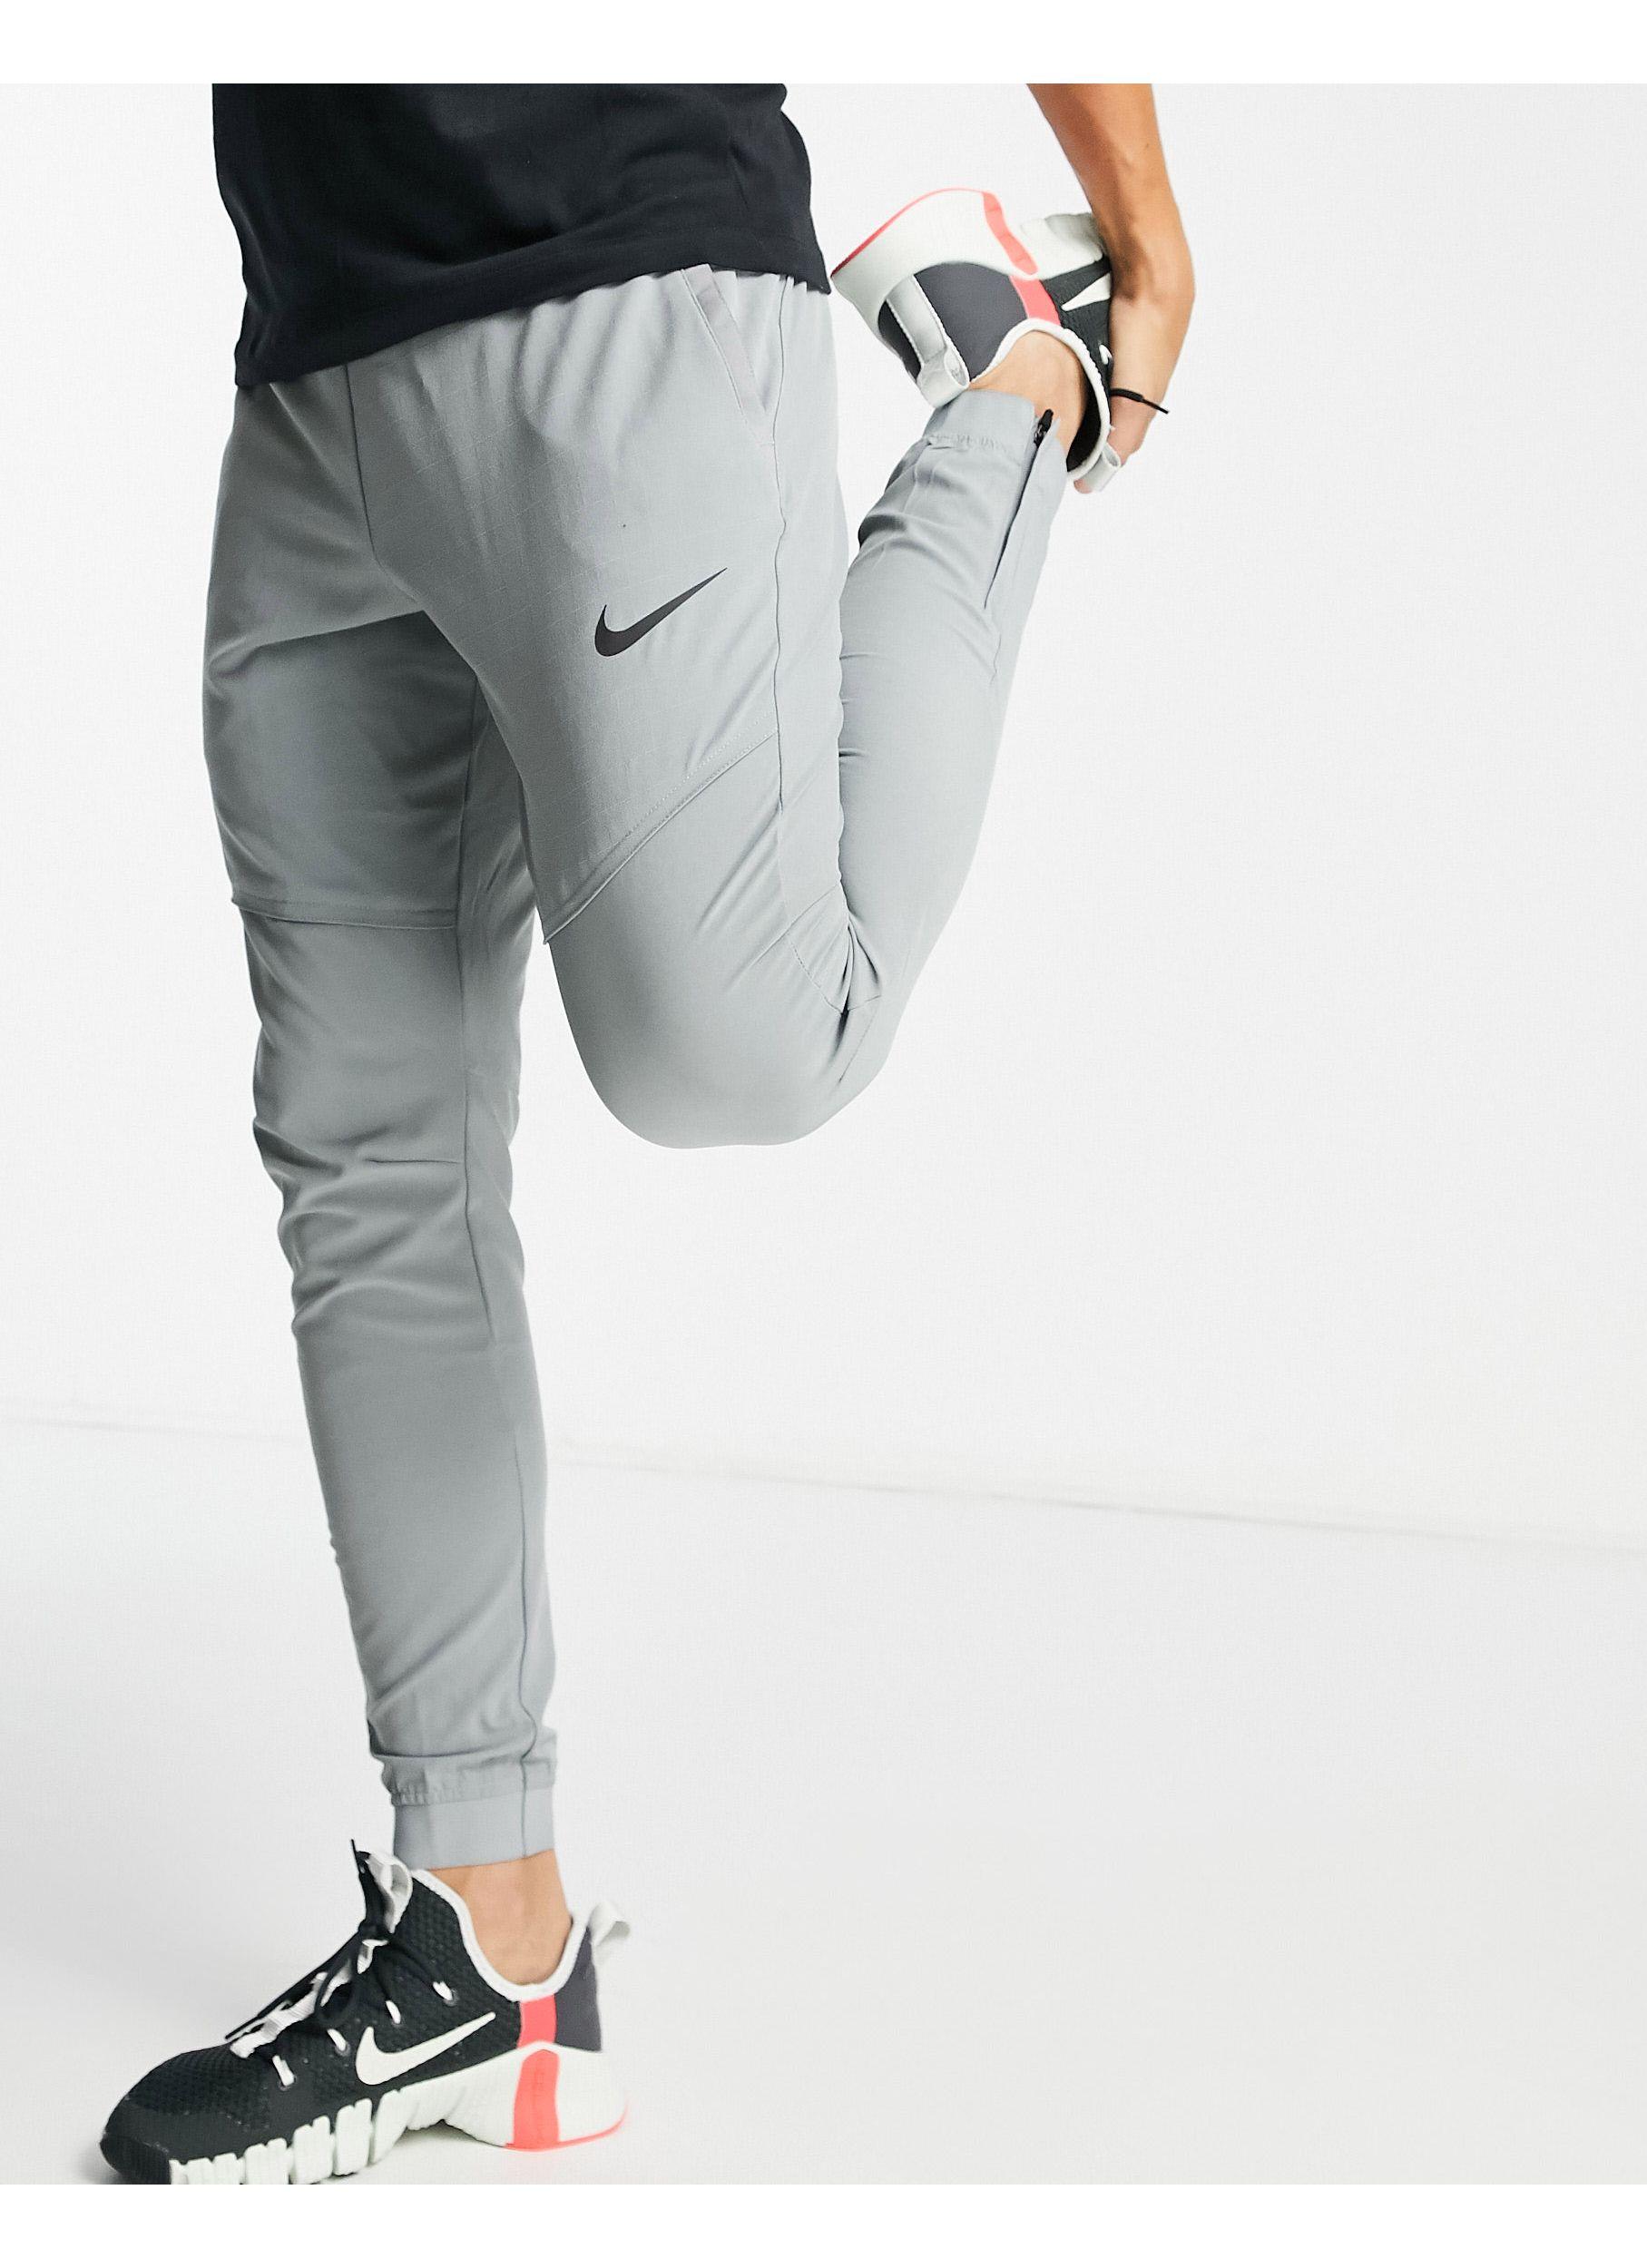 Nike Pro Joggers Flash Sales, SAVE 43% - mpgc.net